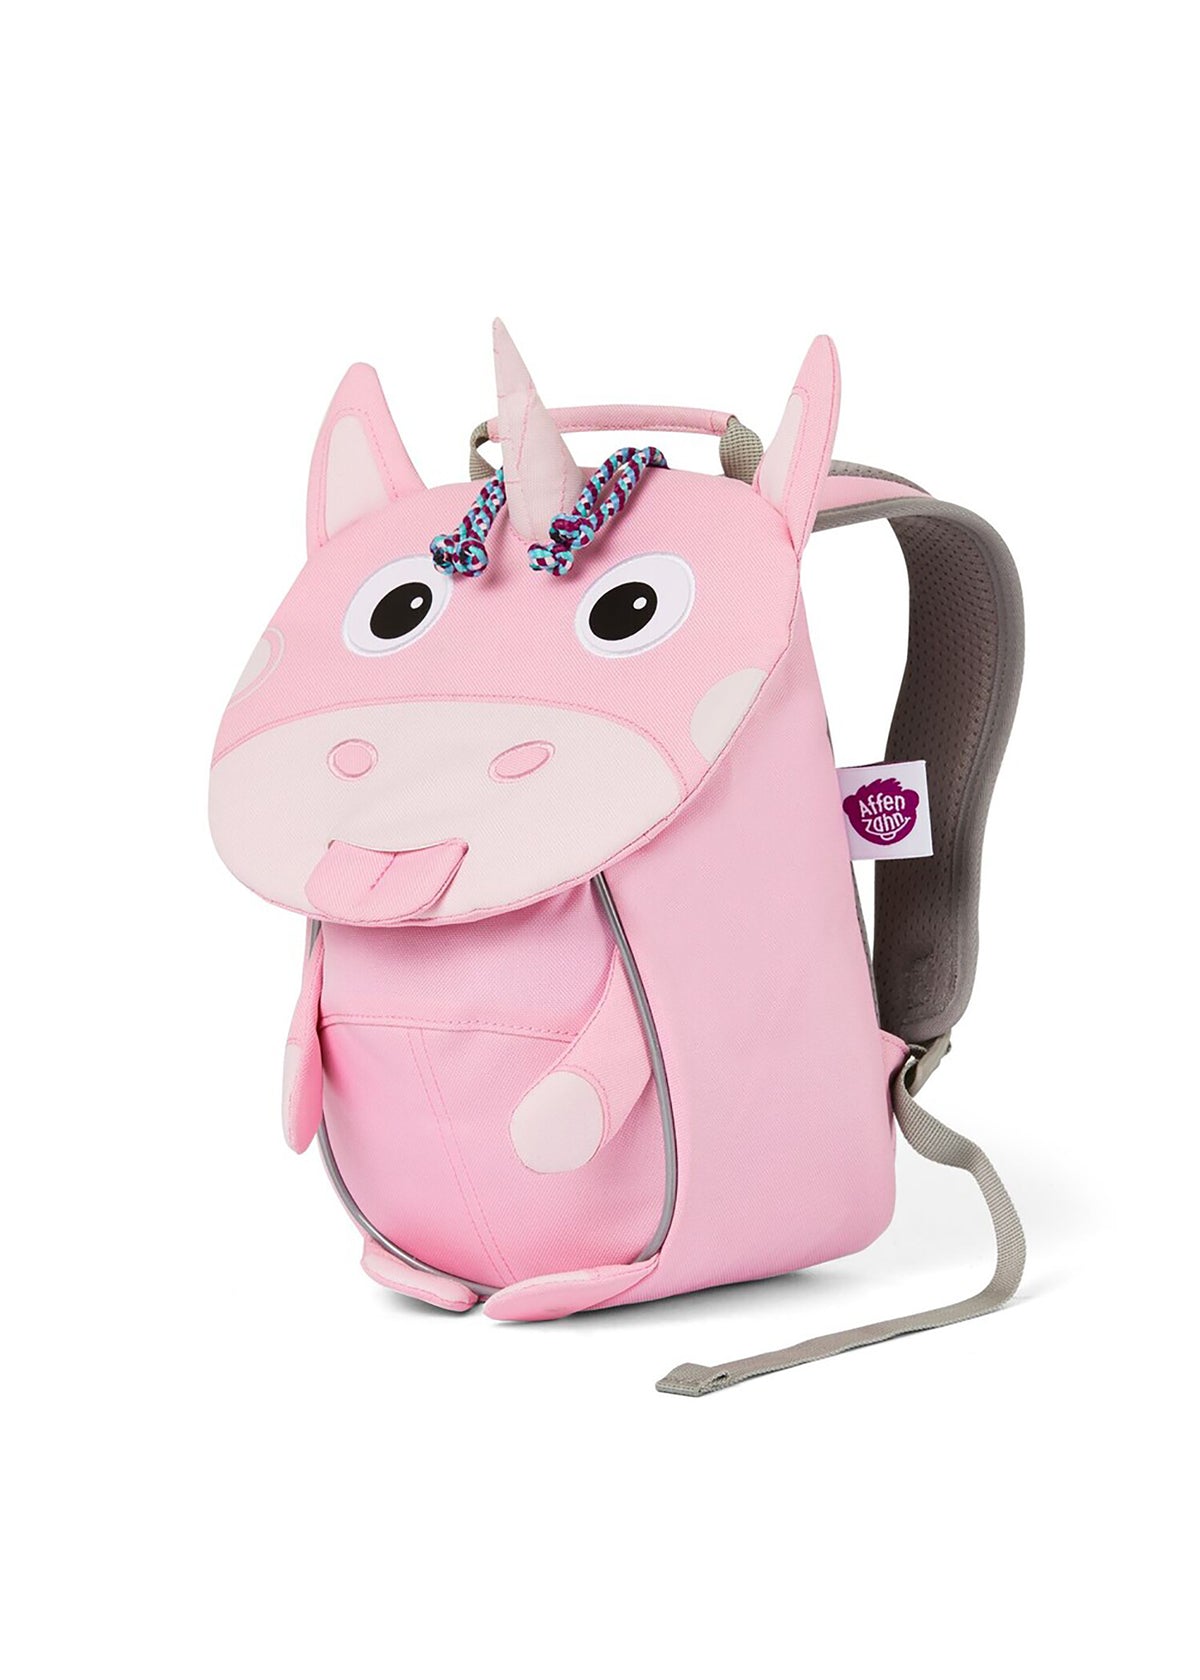 Barnryggsäck, liten - Unicorn